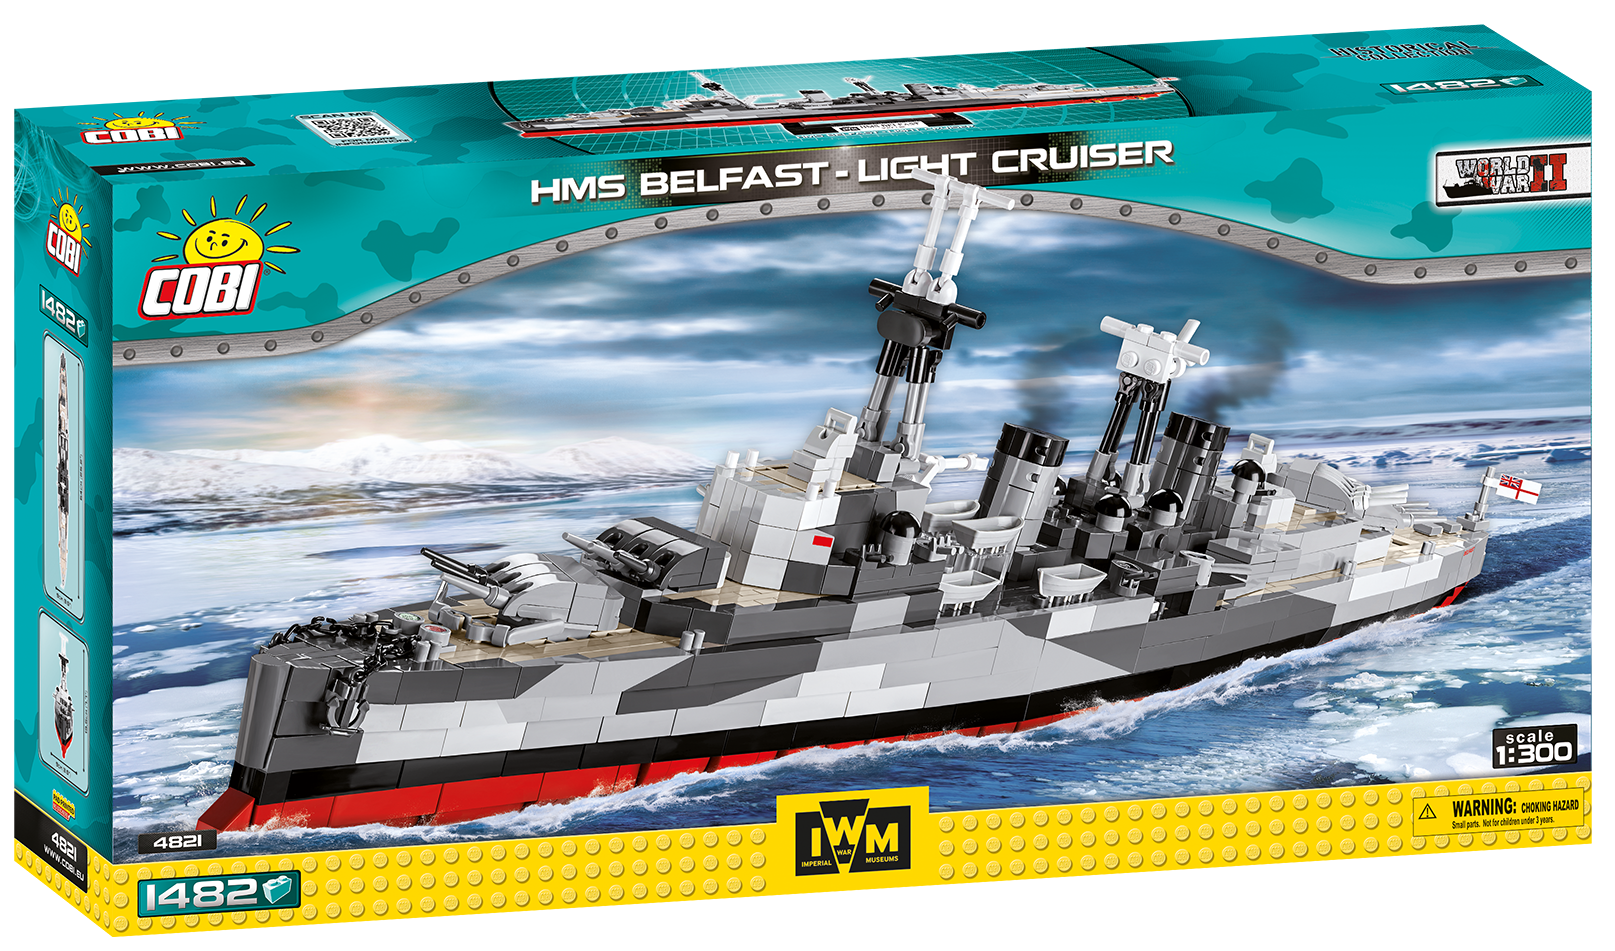 Cobi 4821 HMS Belfast - Light Cruiser